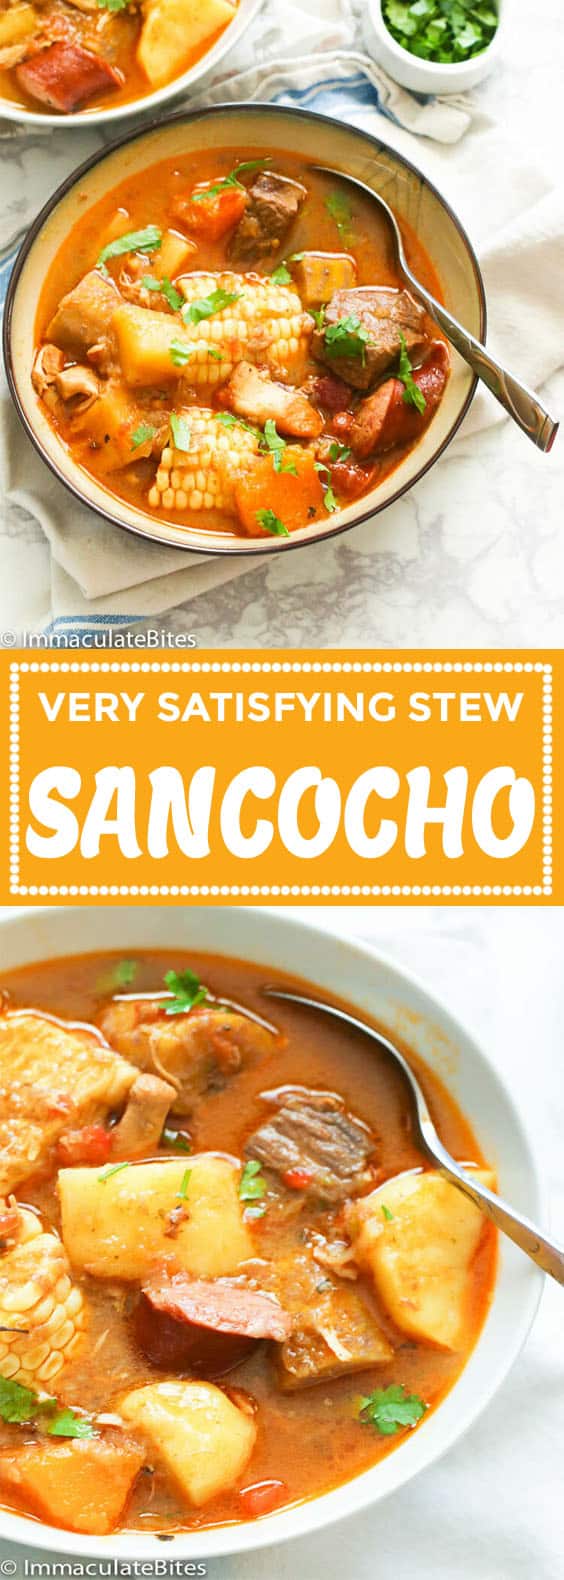 Sancocho Recipe